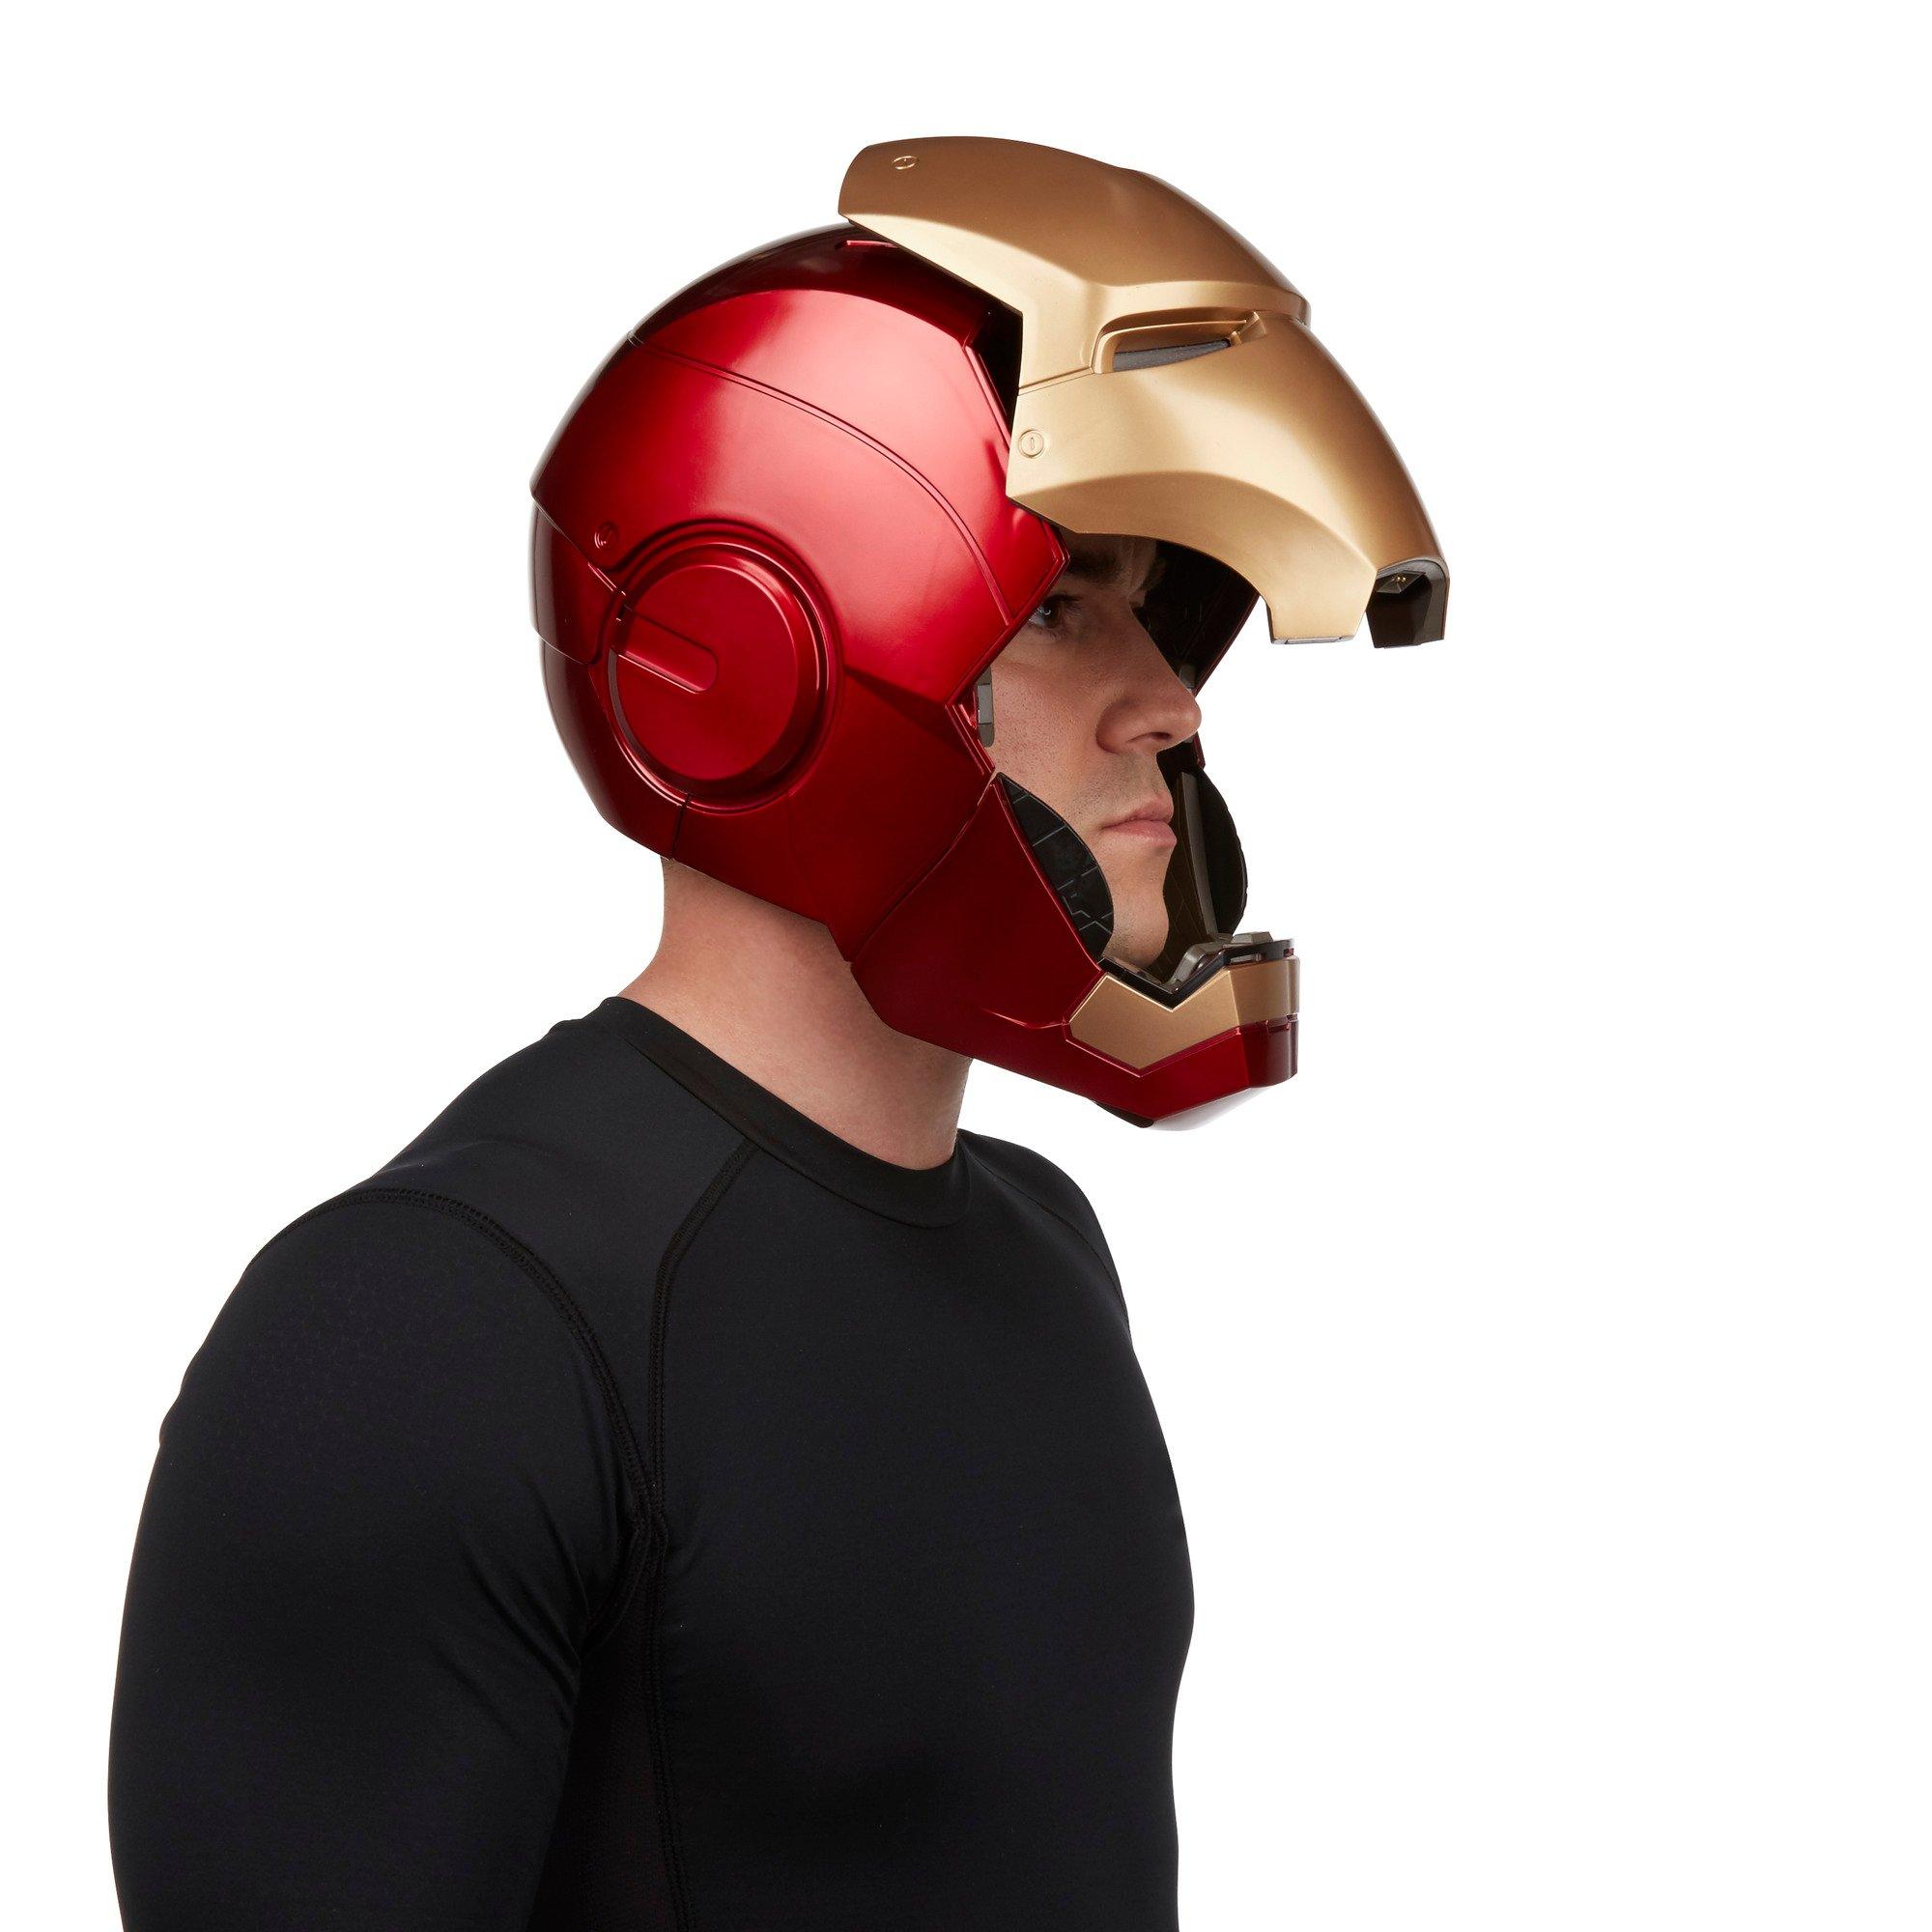 NEW Hasbro Marvel Legends Avengers Iron Man Electronic Helmet Prop Replica Gear 